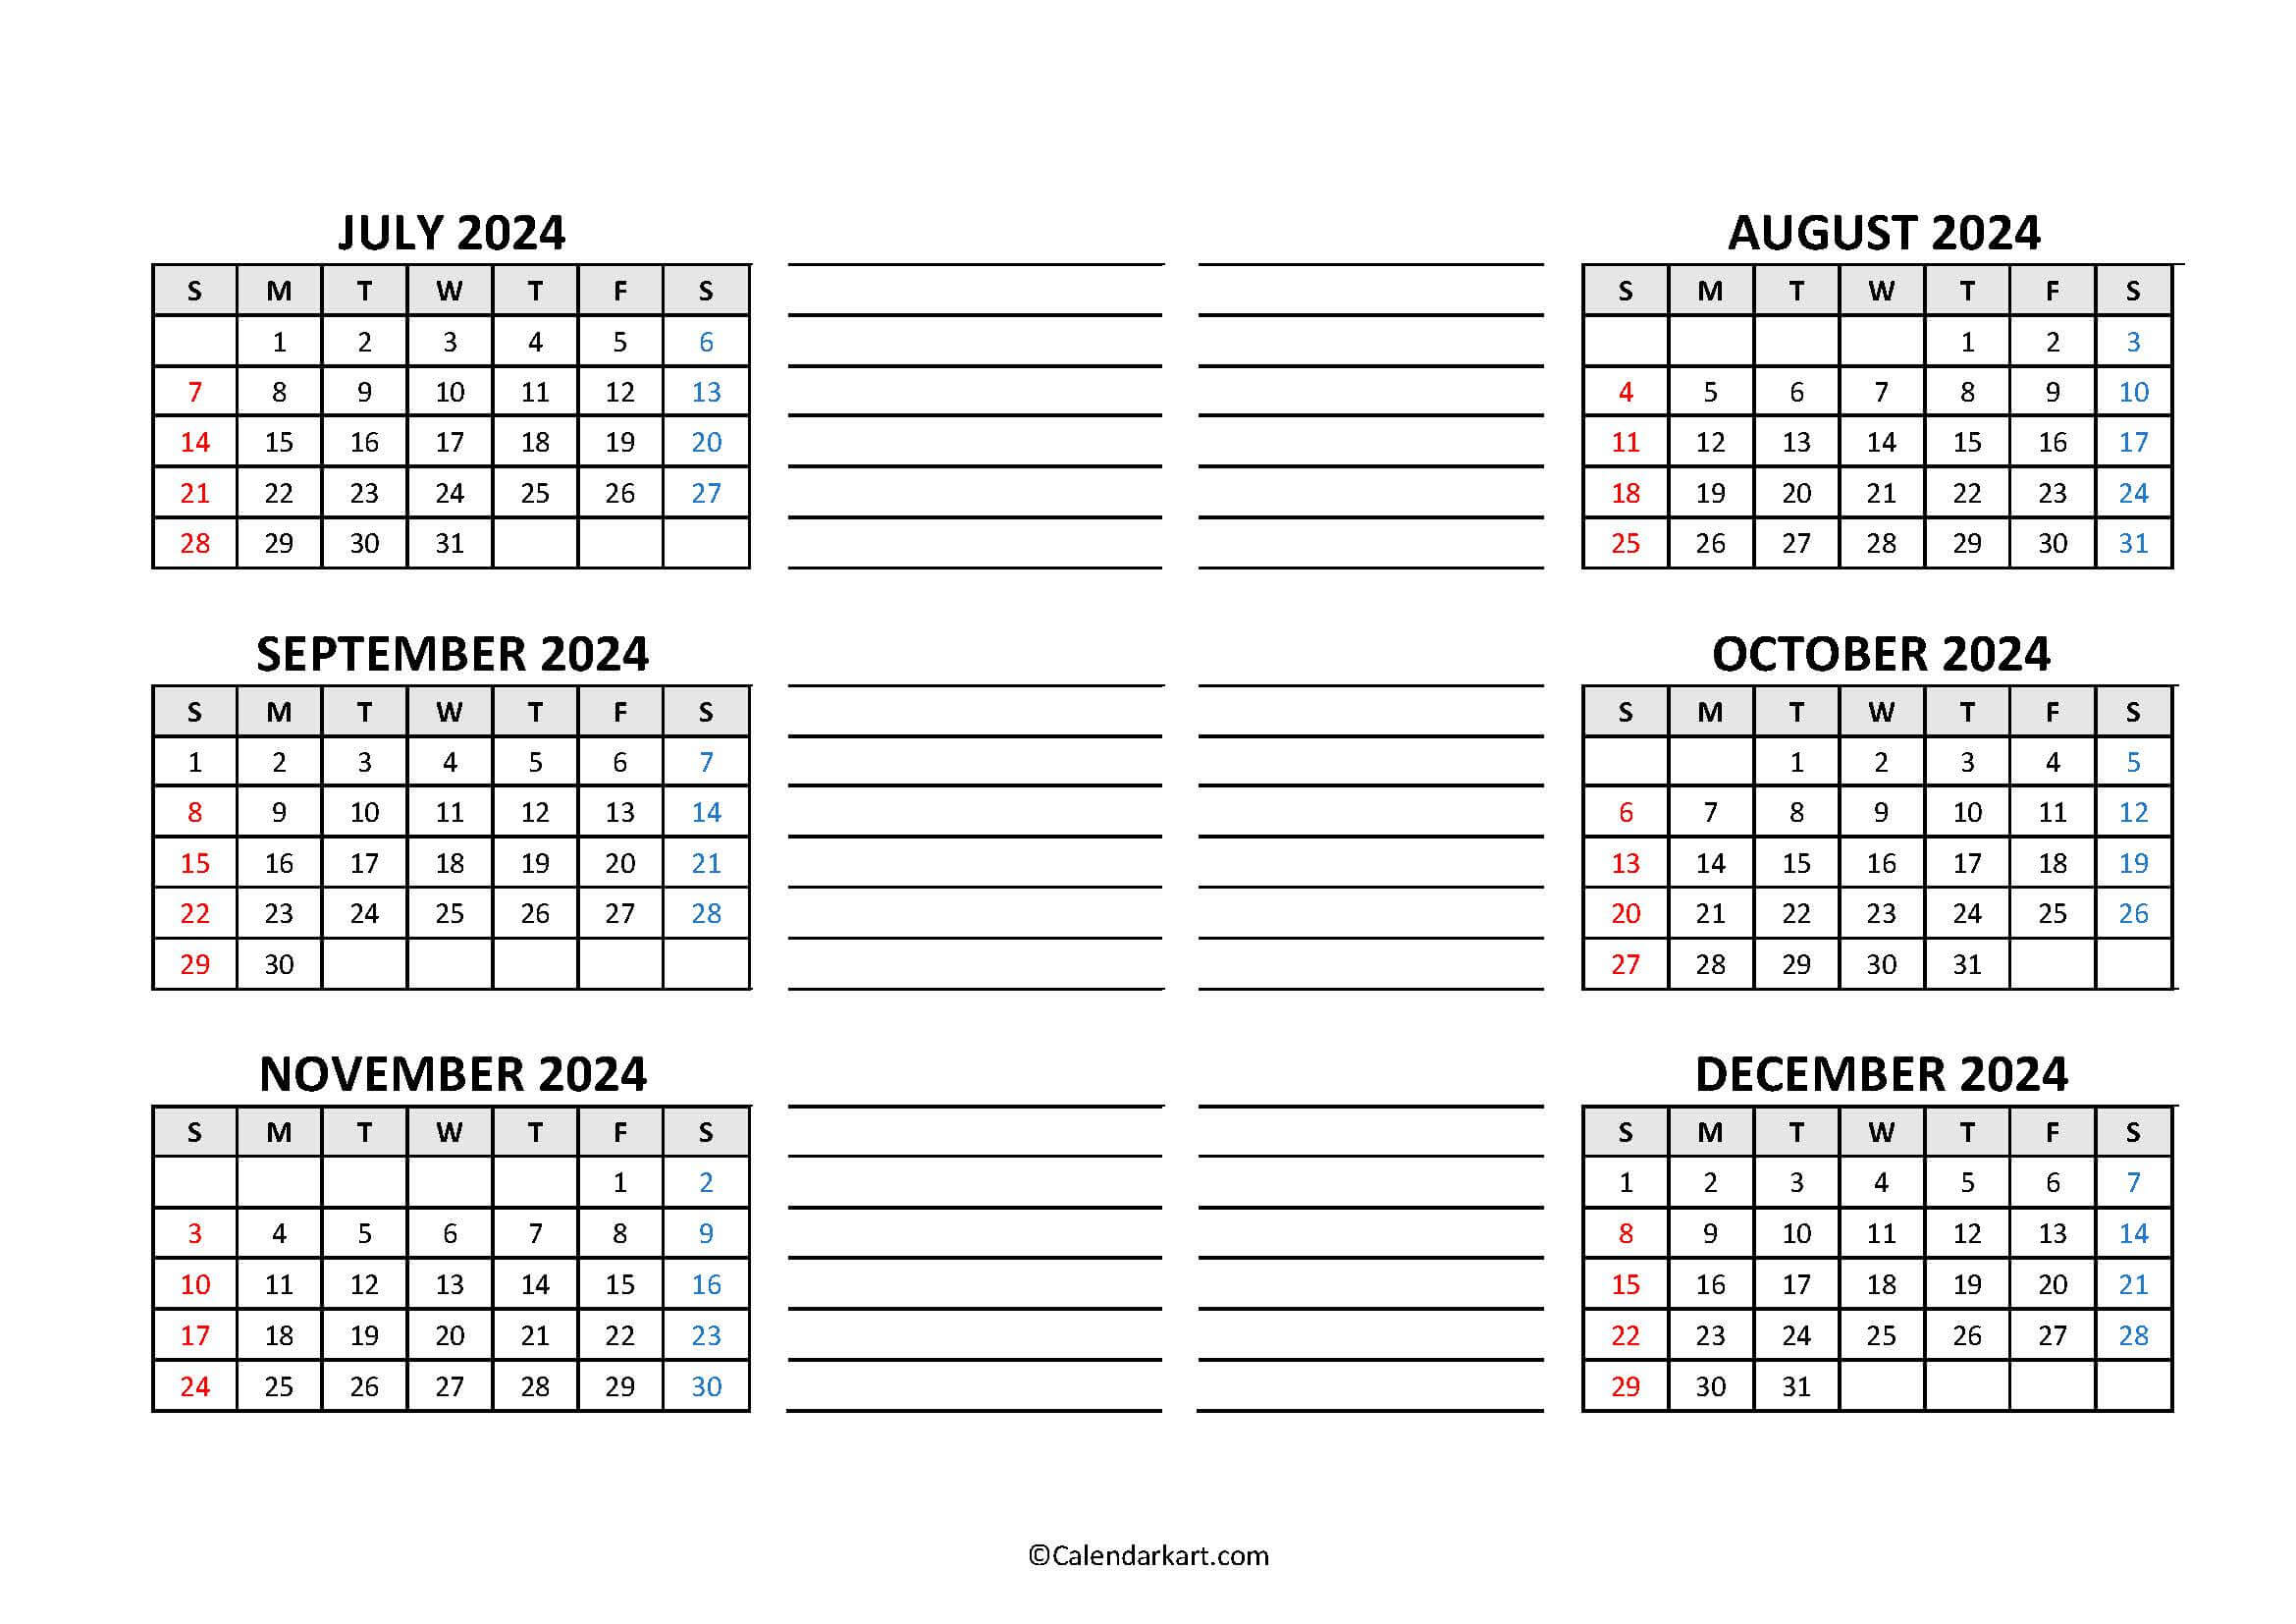 Free Printable Year At A Glance Calendar 2024 - Calendarkart | Calendar 2024 July - December